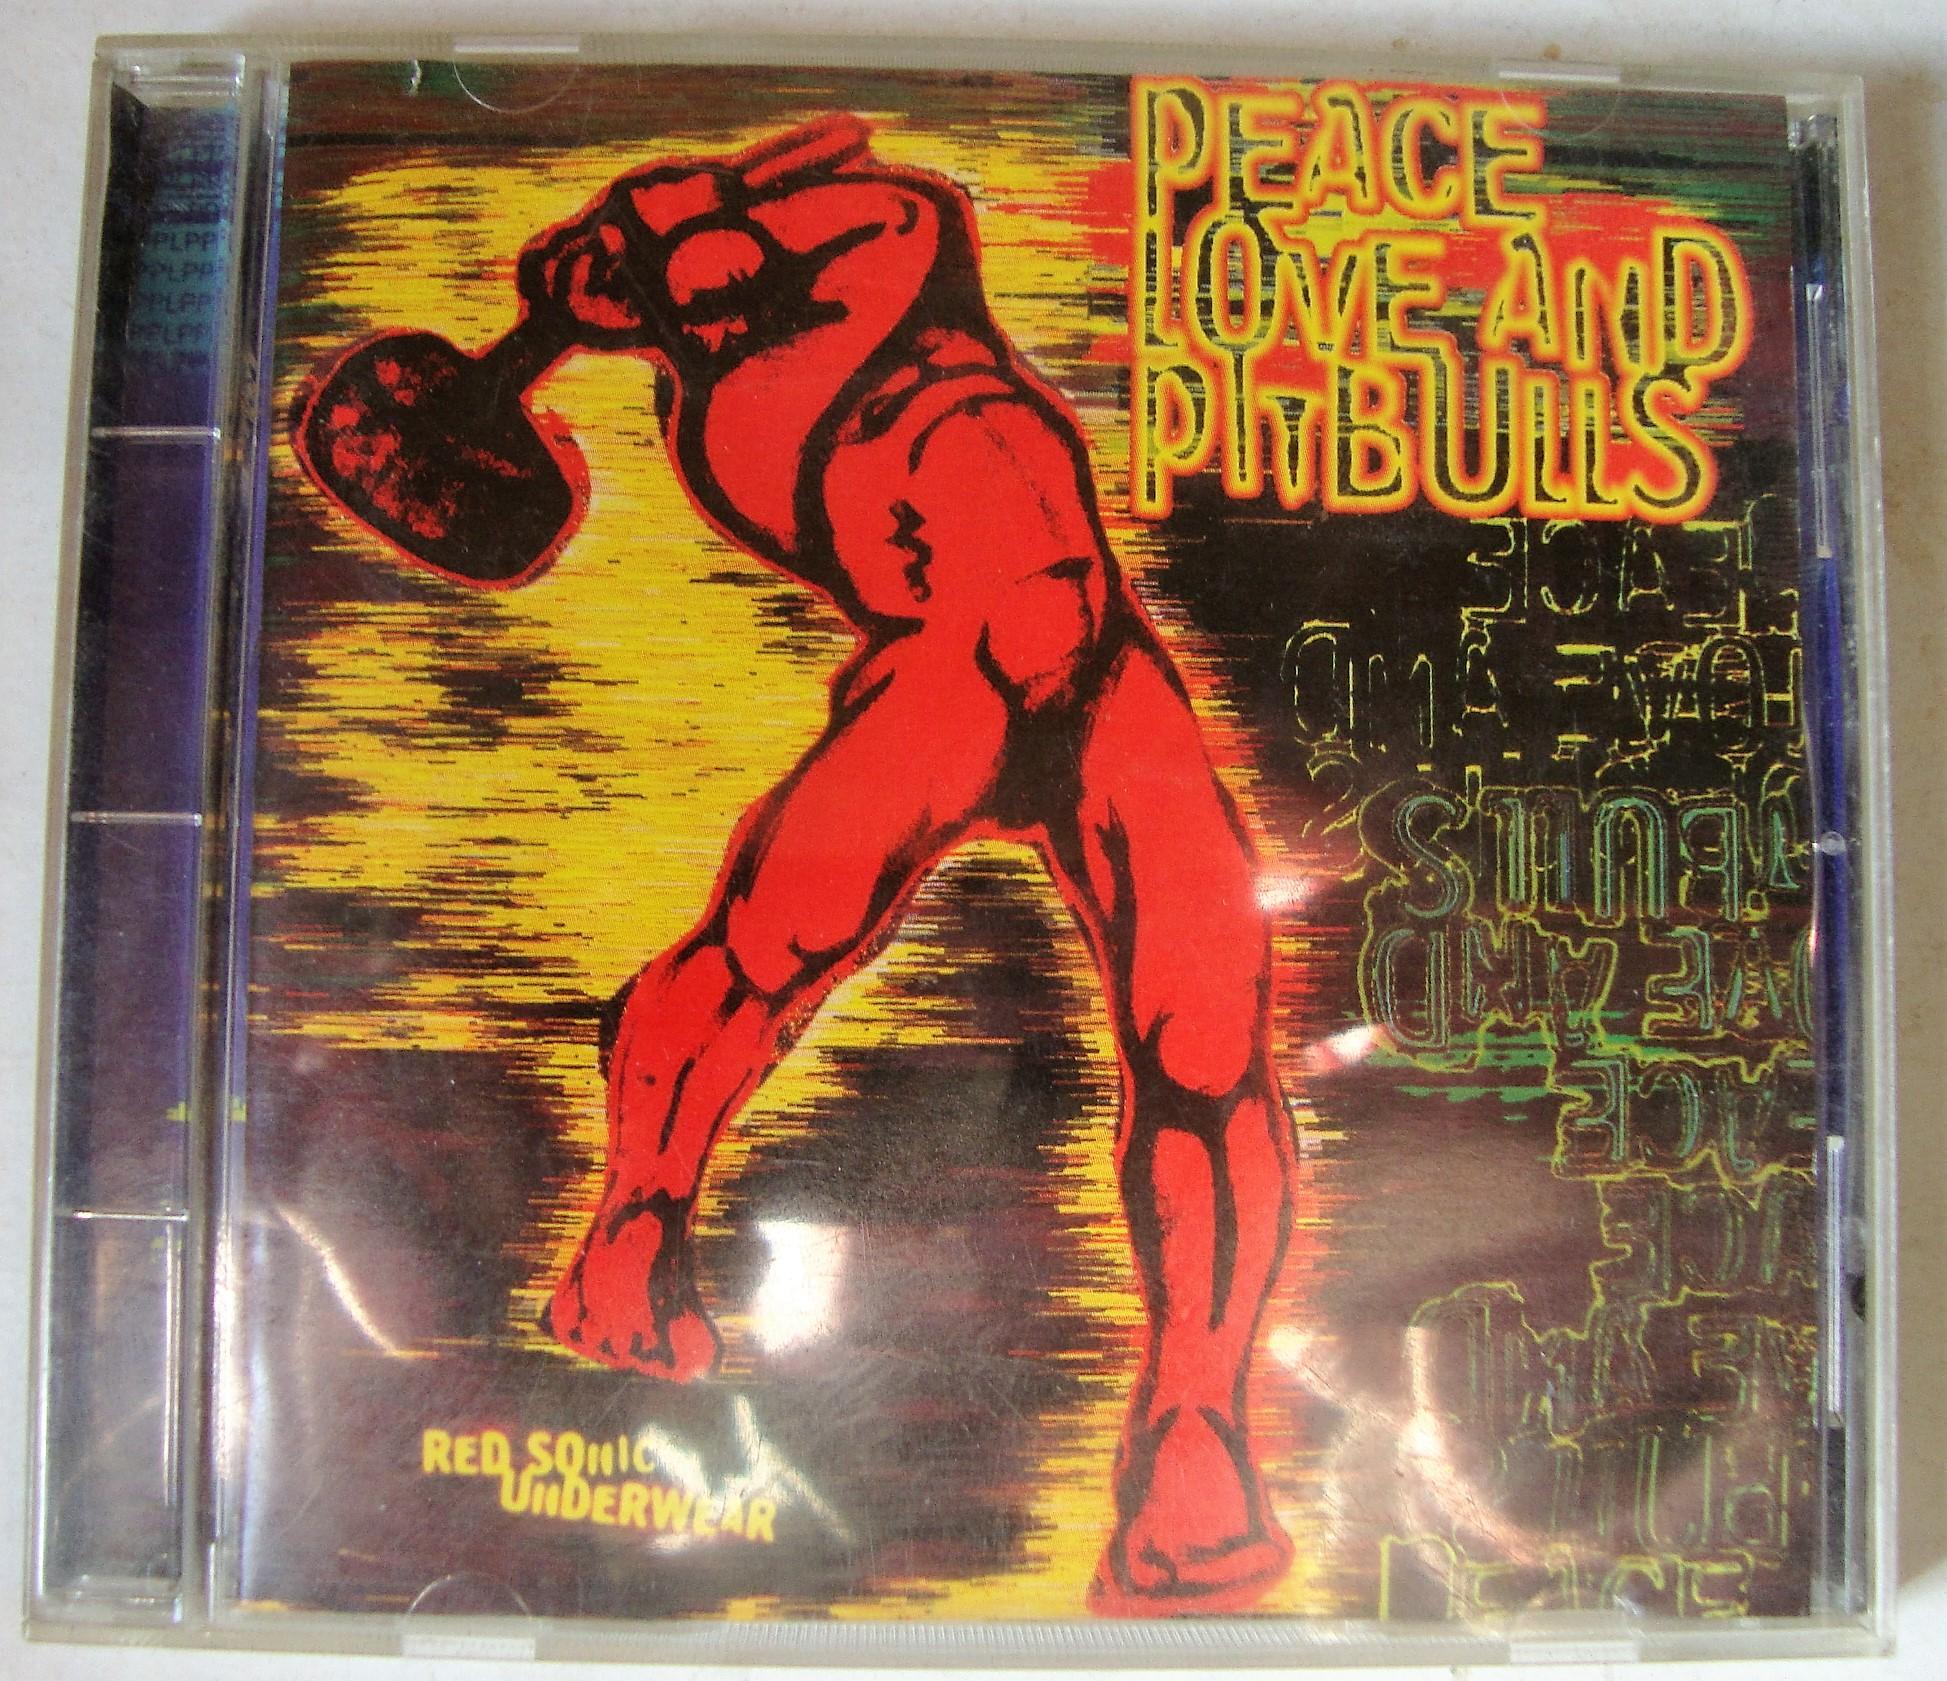 troc de troc cd album peace love and pitbulls " red sonic underwear " image 0